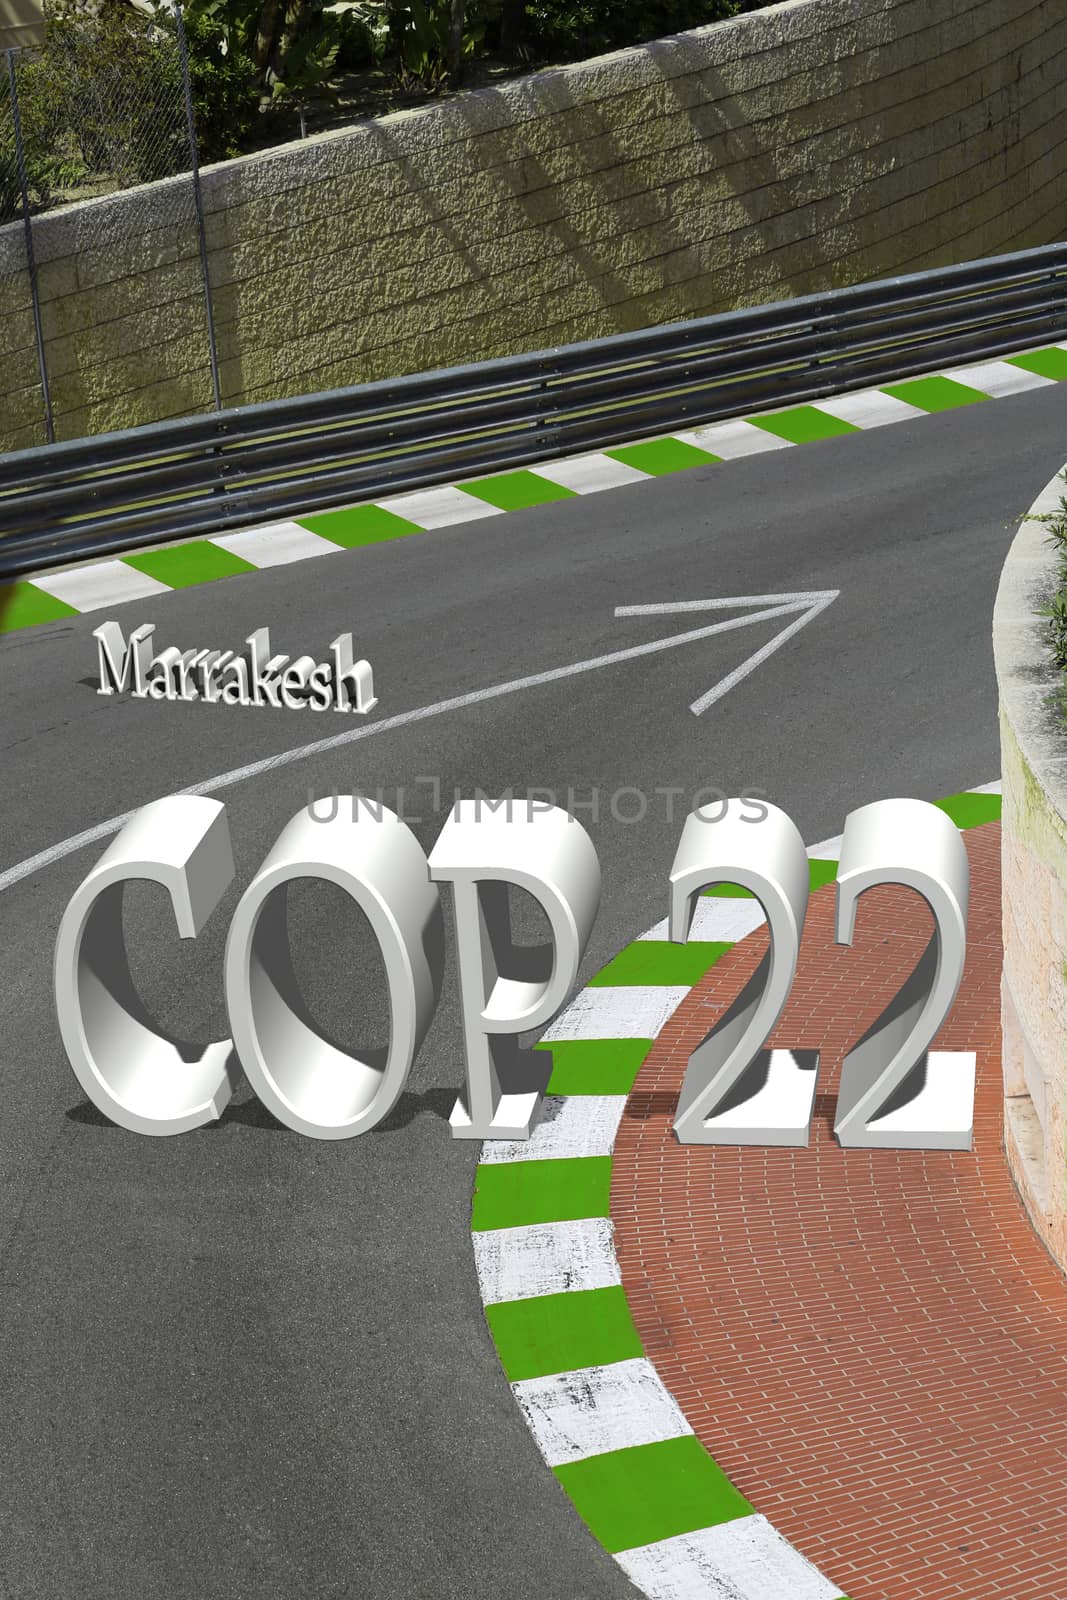 COP 22 Road To Change by bensib